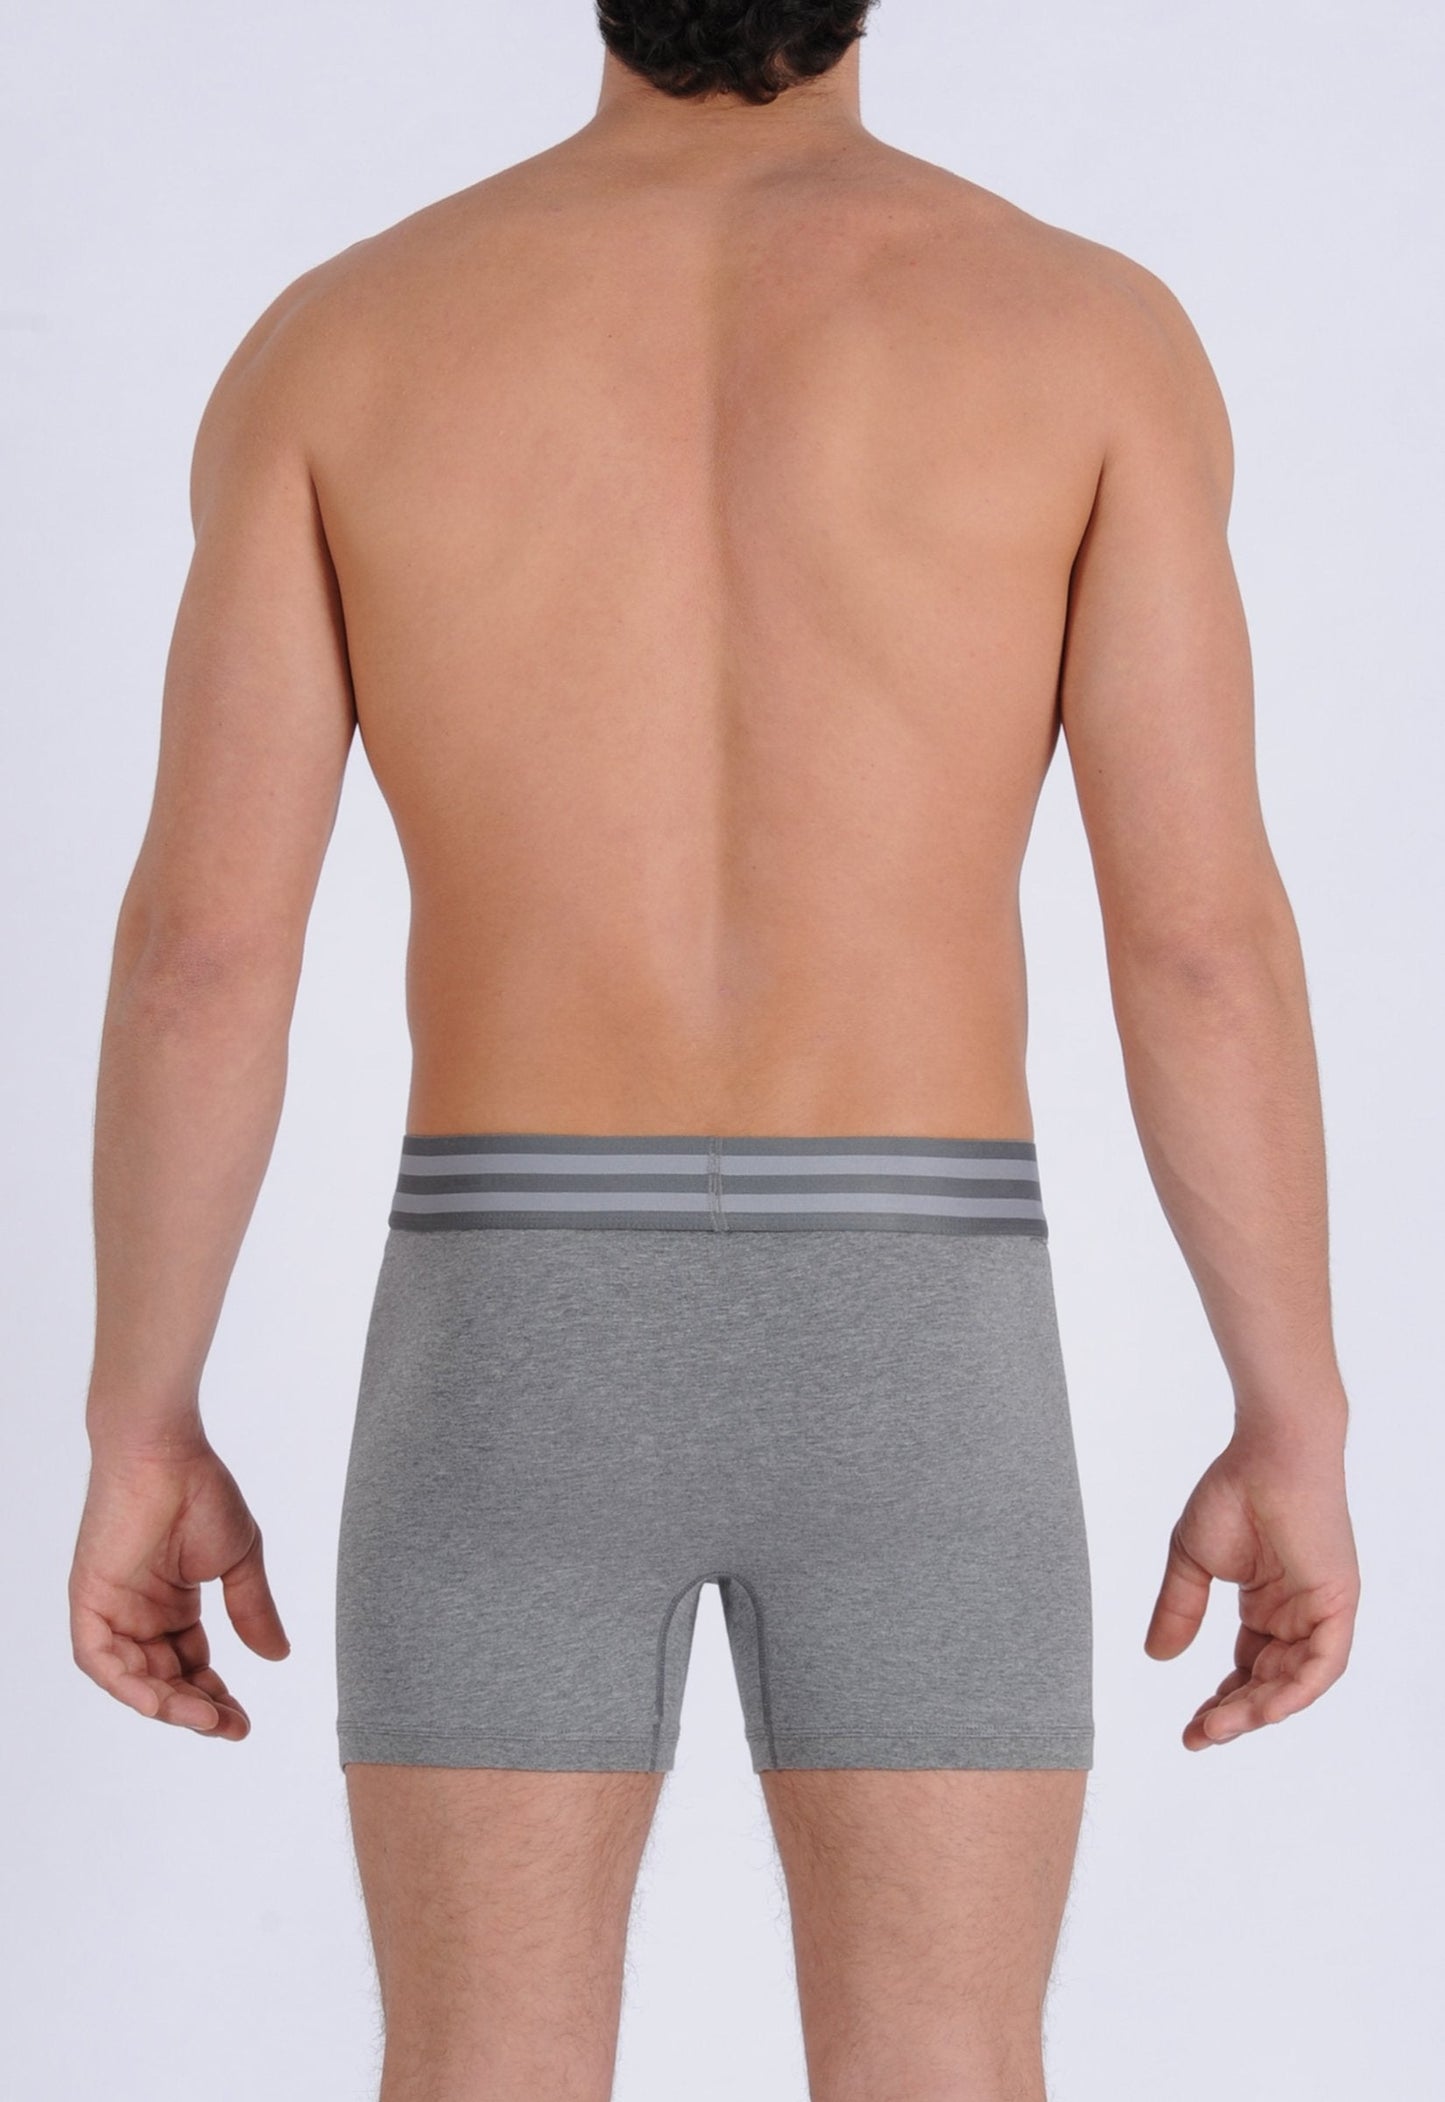 Ginch Gonch Signature Series - Boxer Brief - Grey Men's underwear boxer brief trunk printed waistband back